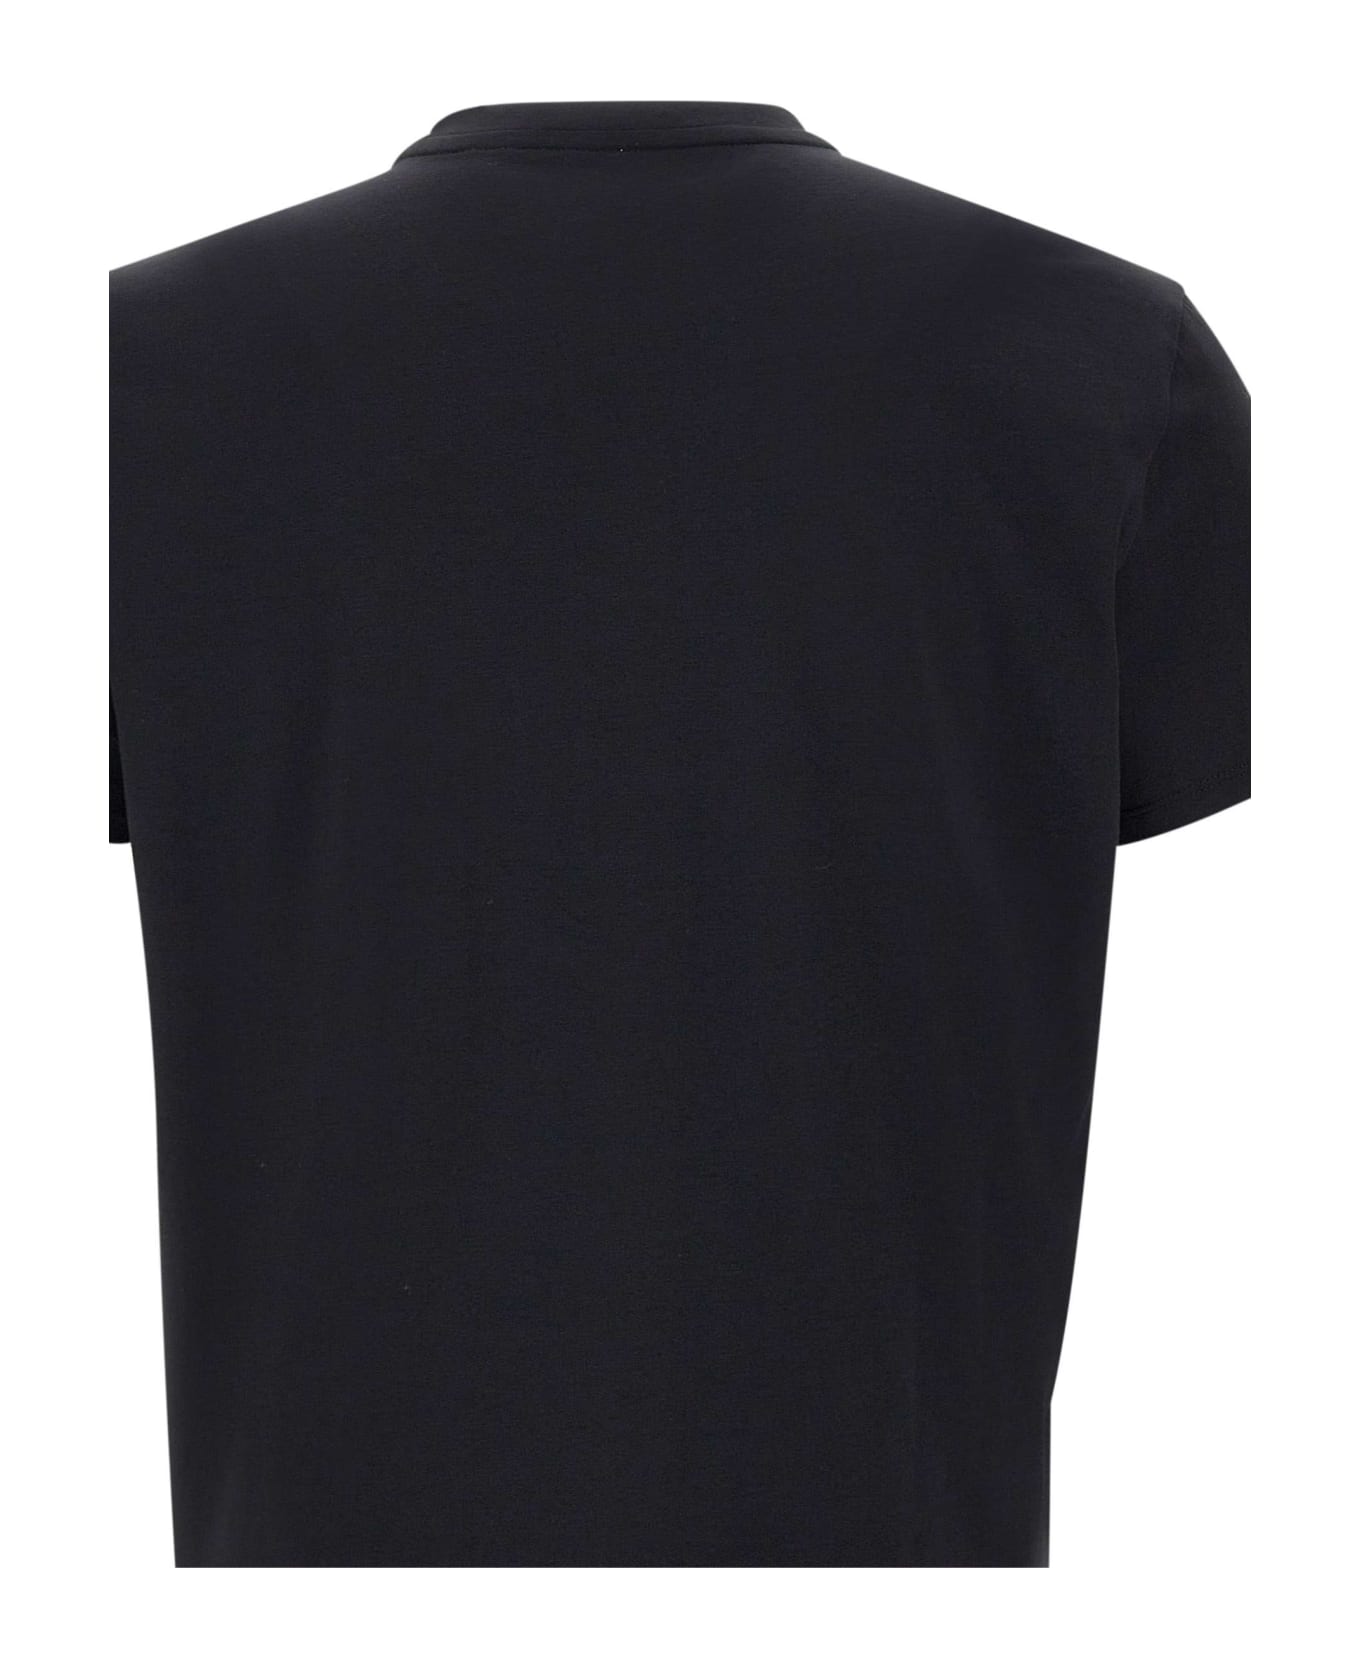 RRD - Roberto Ricci Design 'revo Shirty' T-shirt RRD - Roberto Ricci Design - BLACK